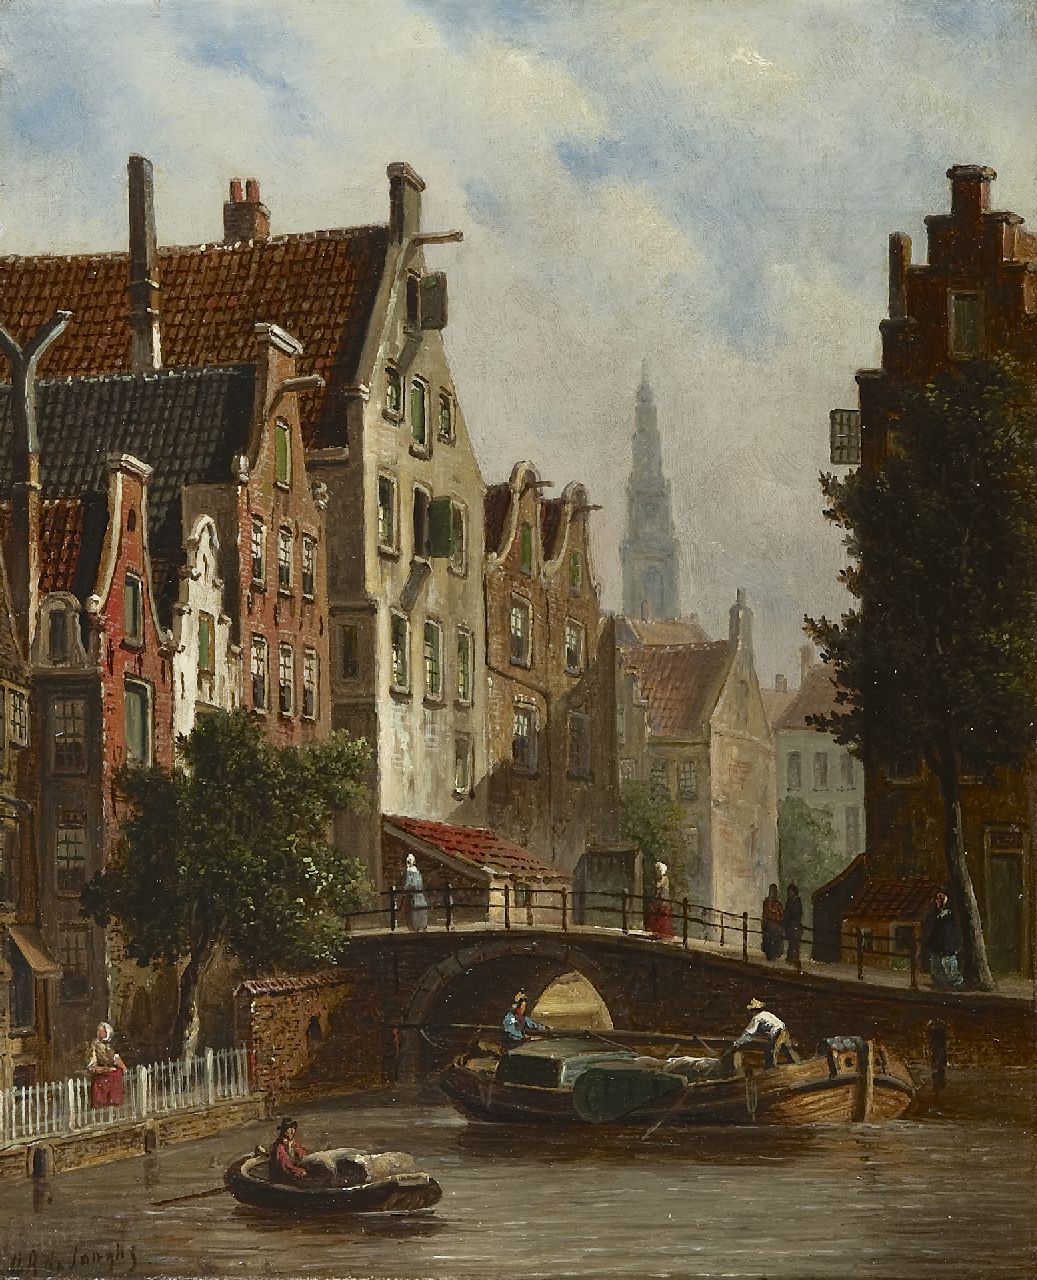 Jongh O.R. de | Oene Romkes de Jongh, A town view of Amsterdam, oil on canvas 36.1 x 29.7 cm, signed l.l.